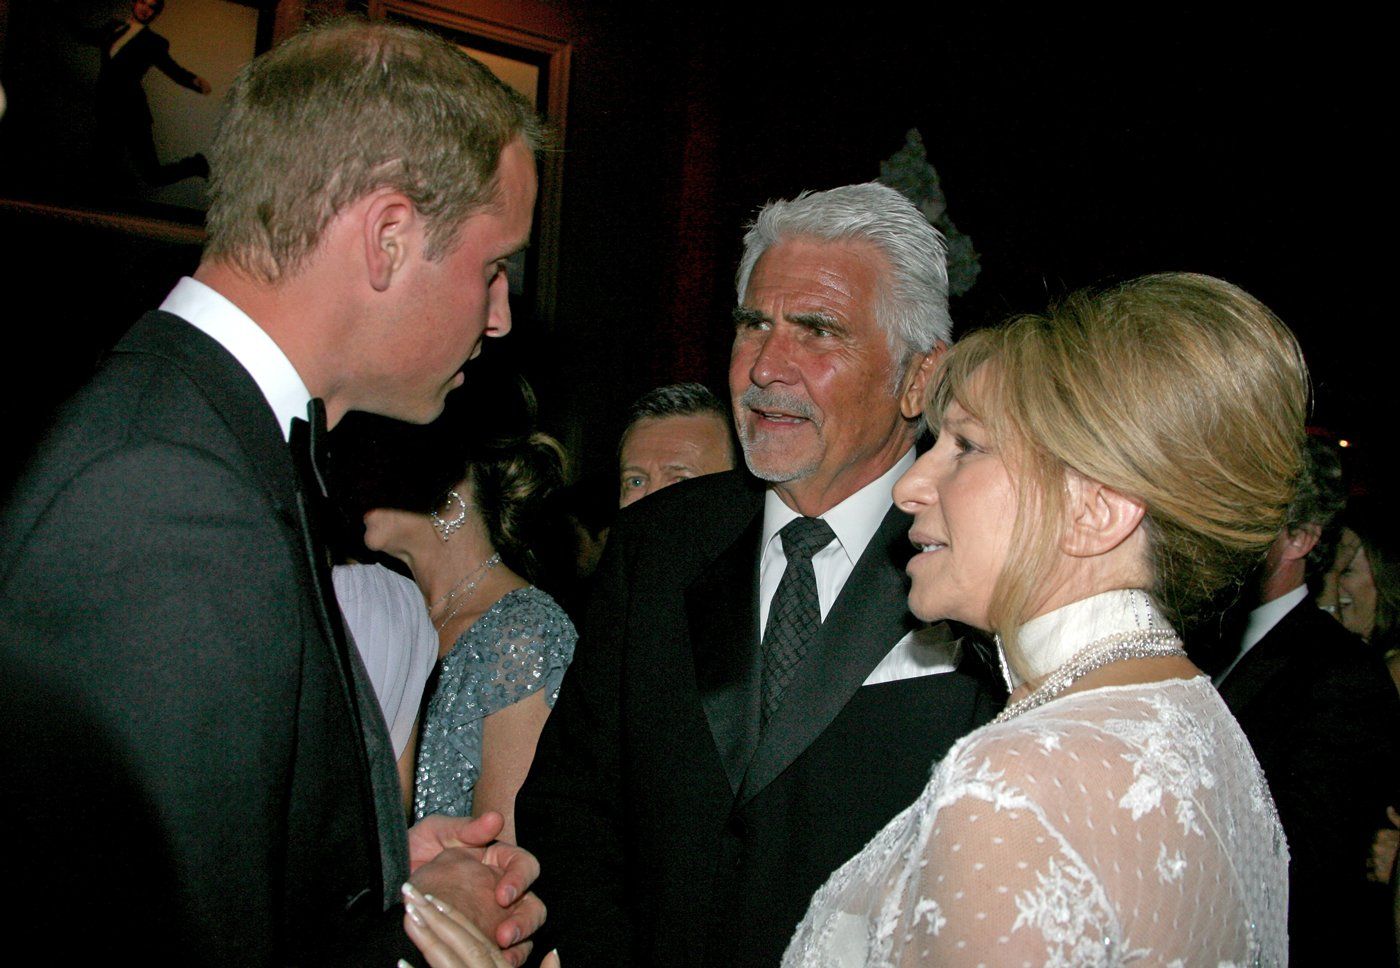 Prince William, Duke of Cambridge, James Brolin and Barbra Streisand attend the BAFTA 